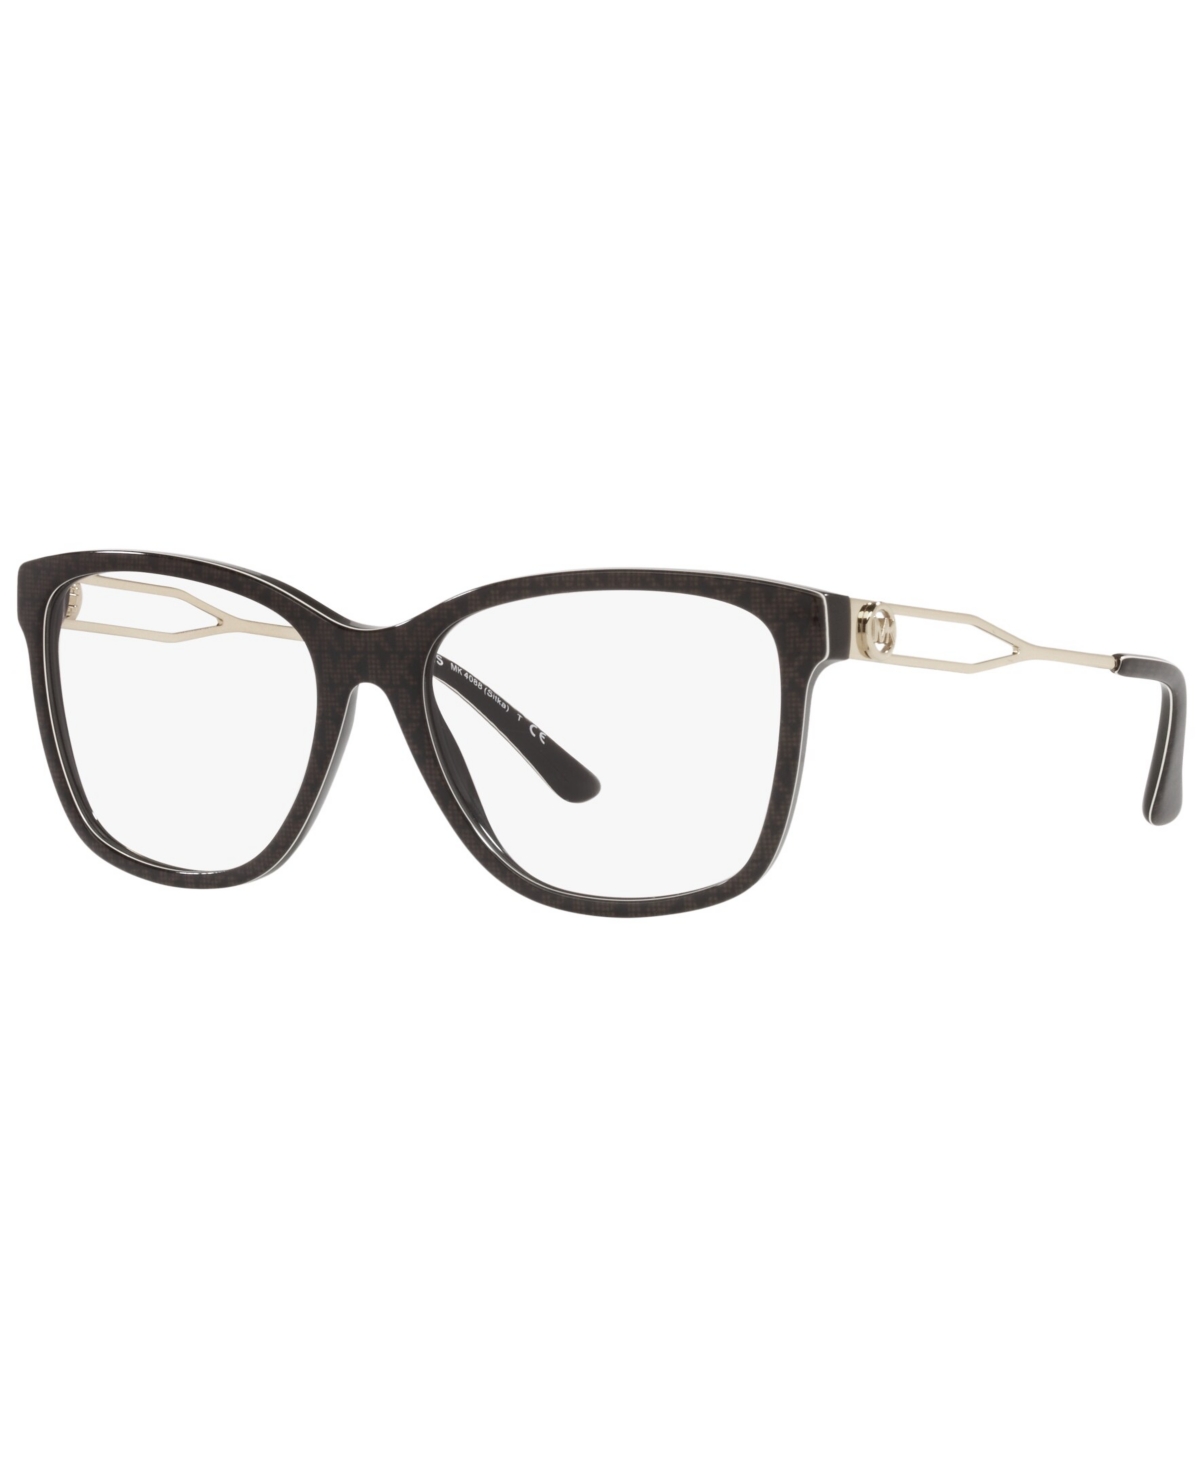 MK4088 Sitka Women's Square Eyeglasses - Brown Signature PVC